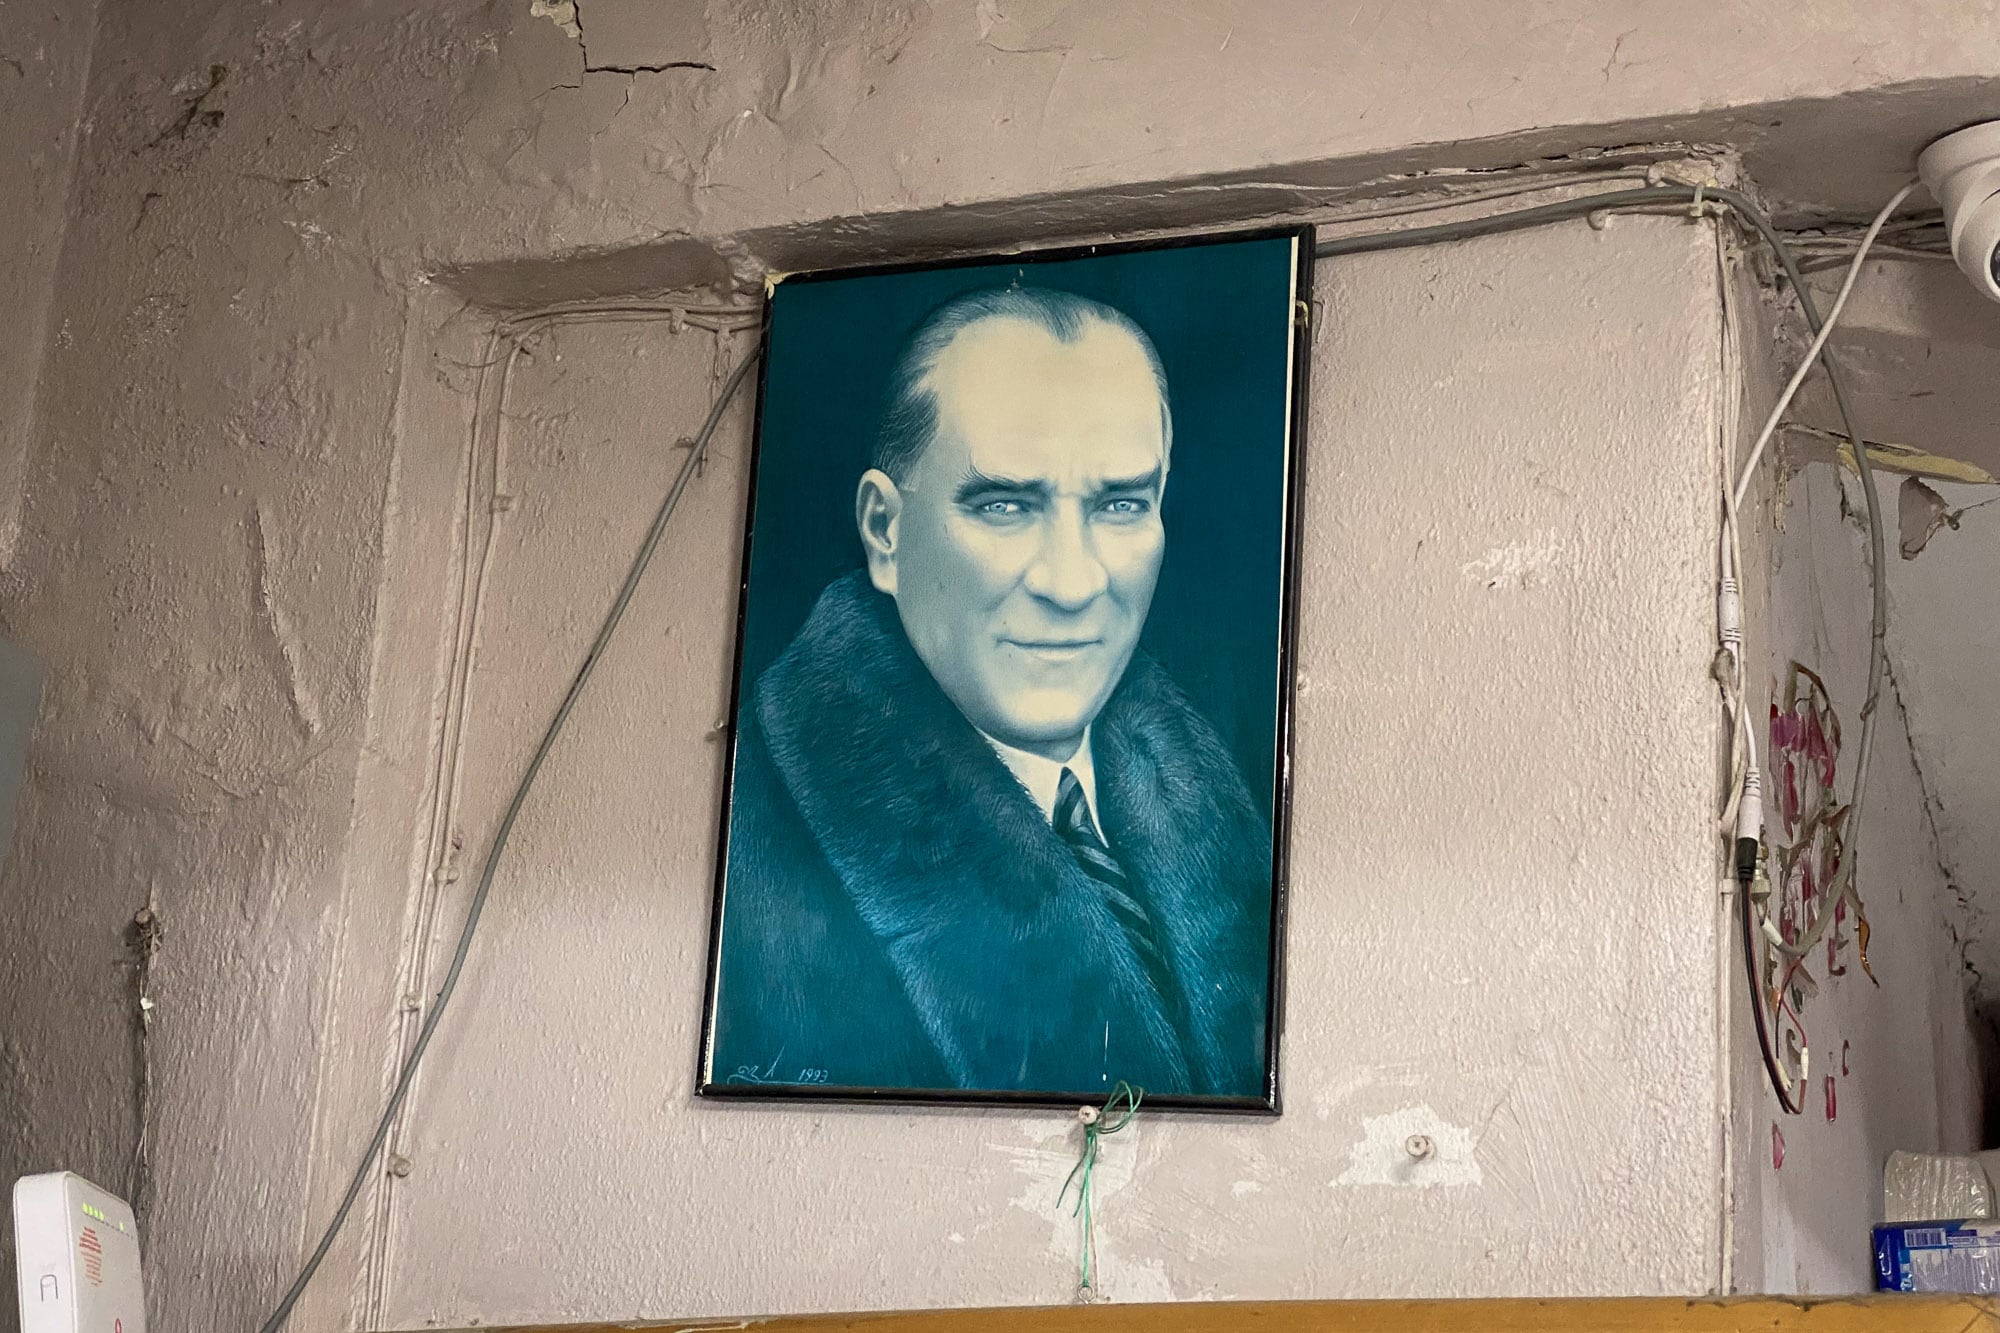 Atatürk vampire mode